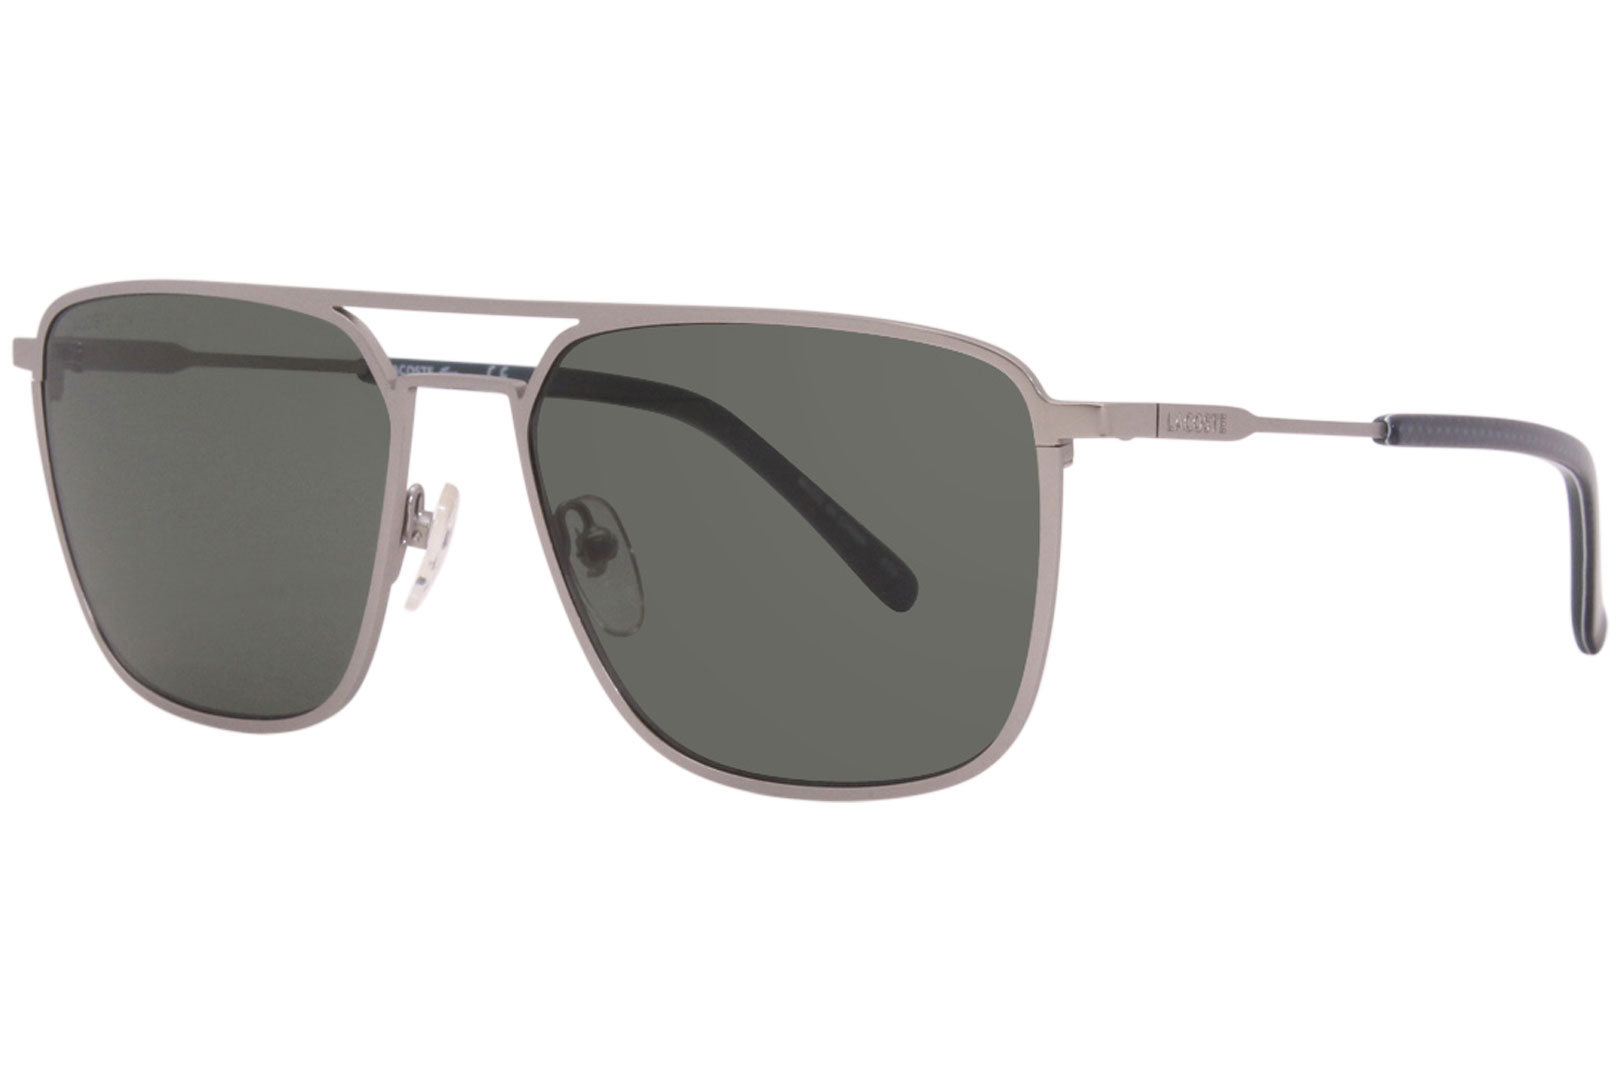 Lacoste Sunglasses Men's L194S 035 Matte Grey Metal/Green Lenses 57mm ...